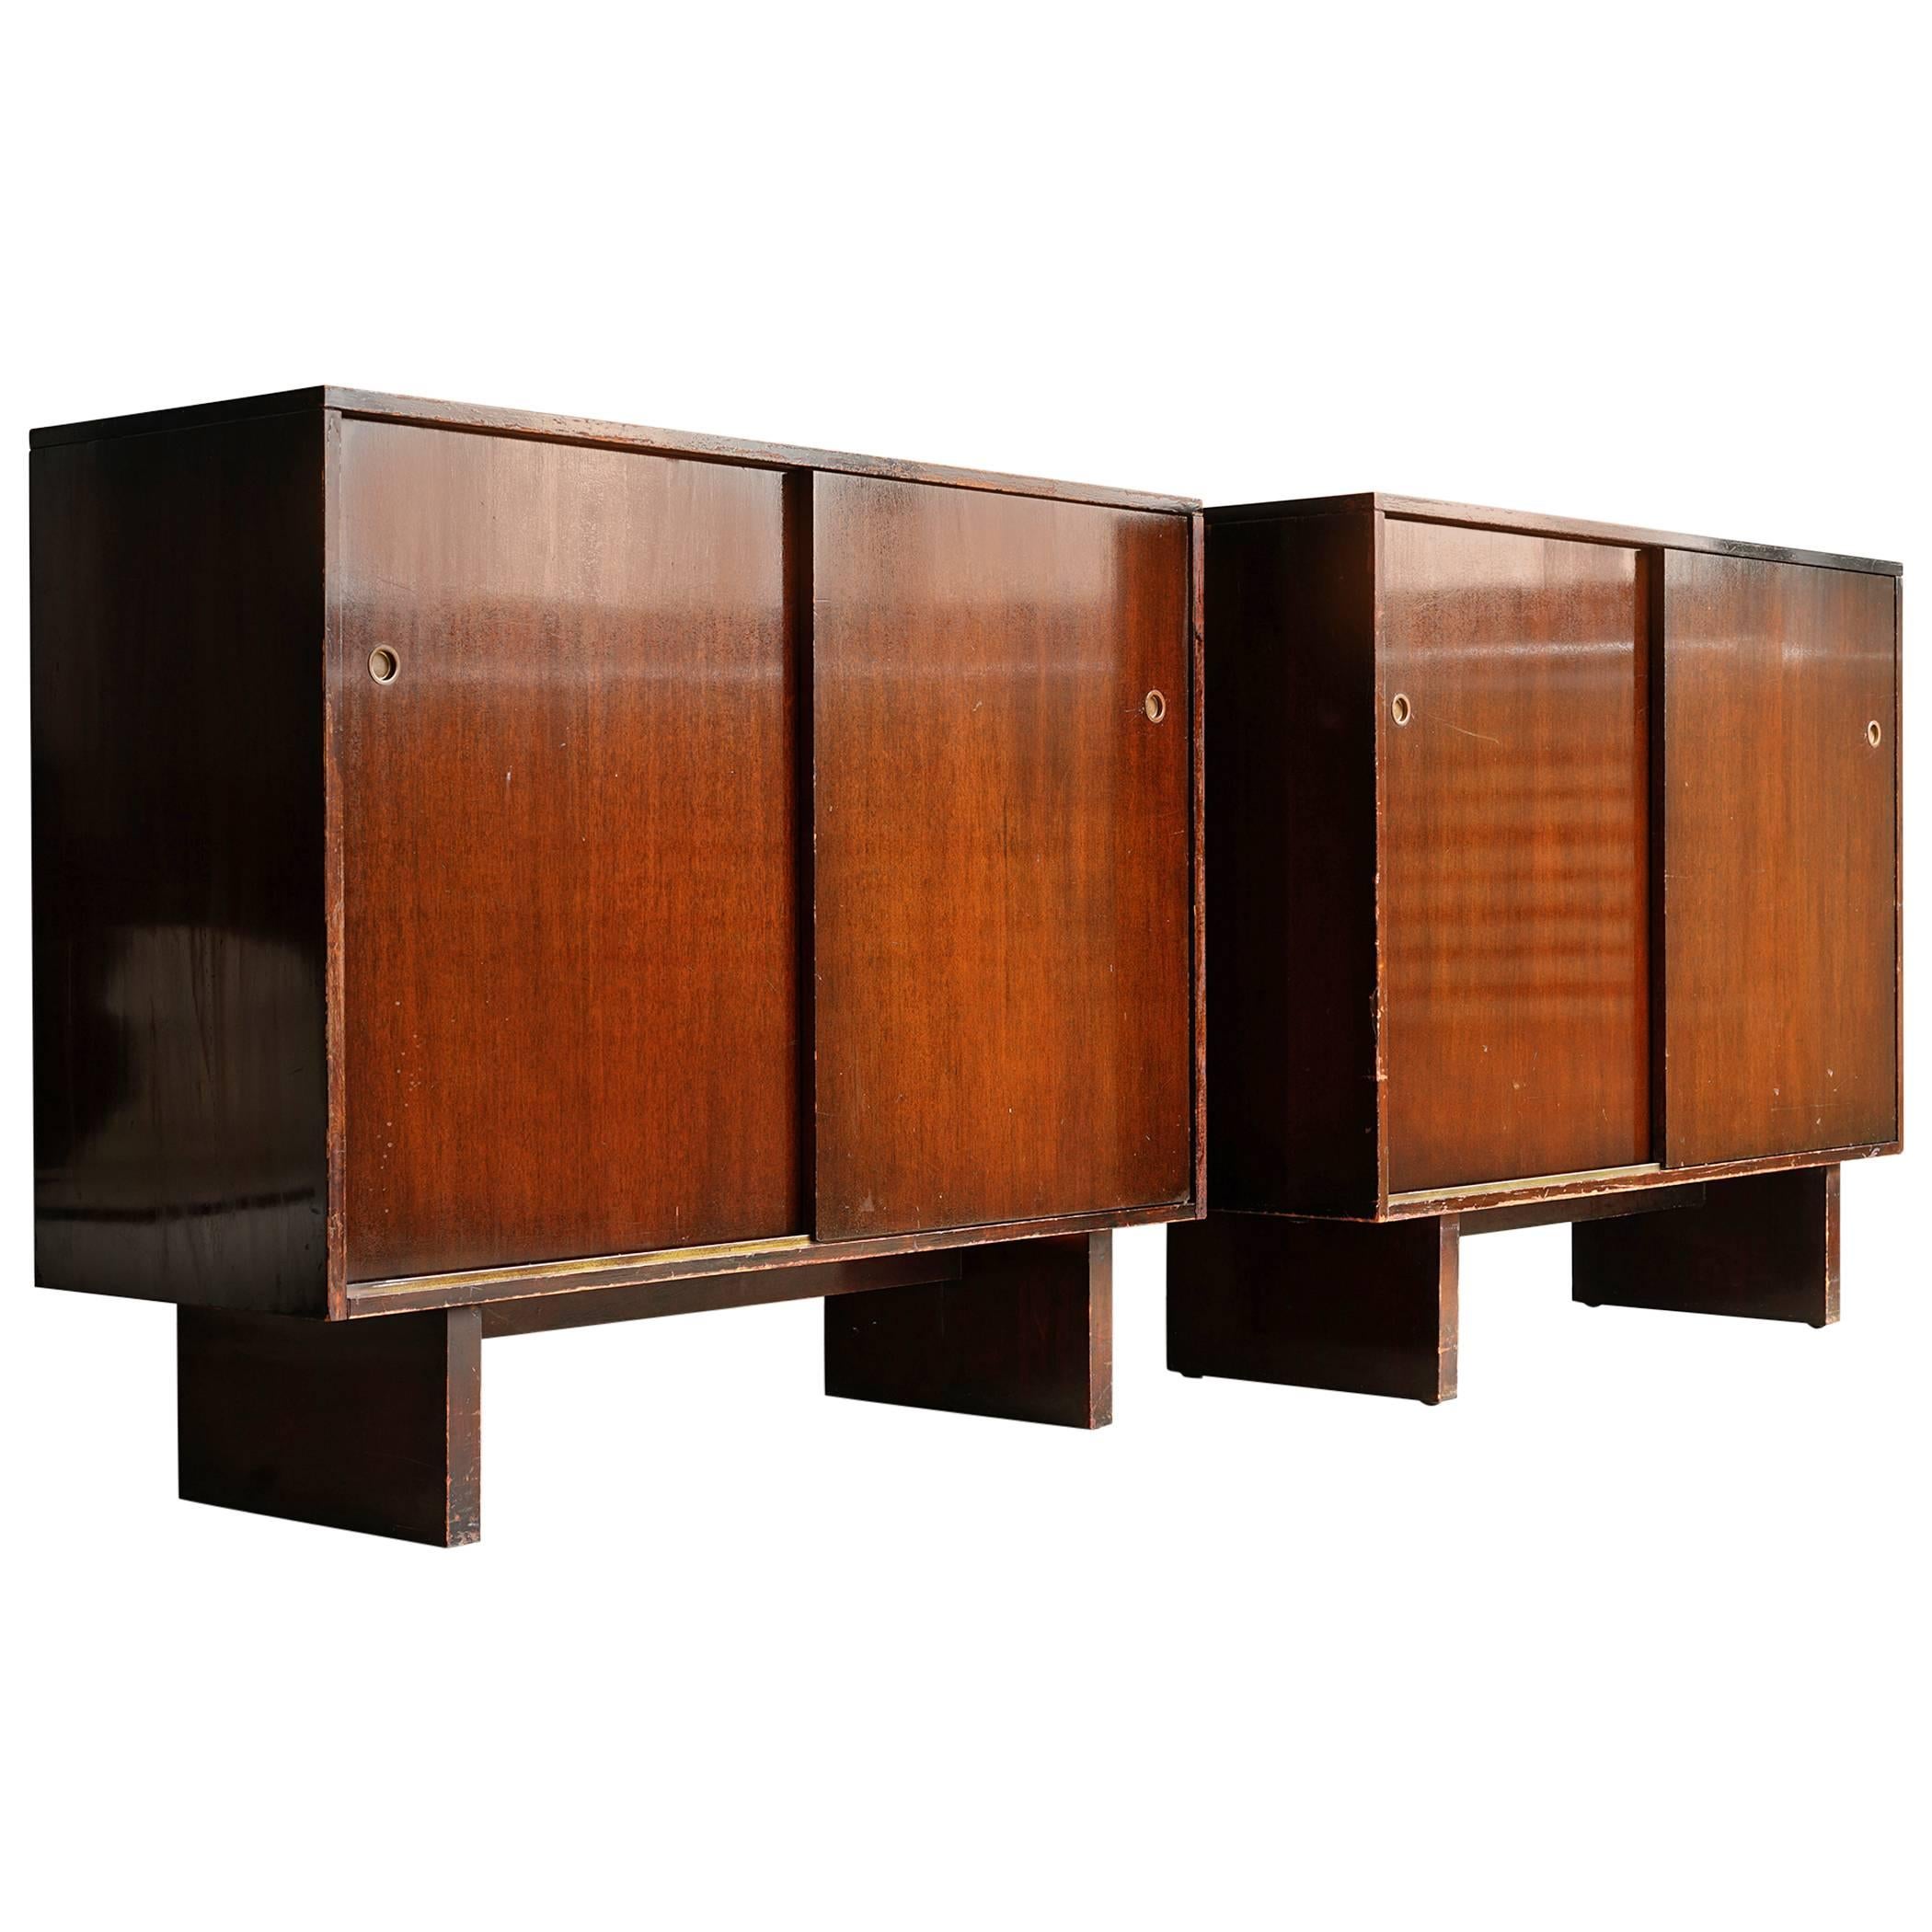 Mahogany Dressers by Widdicomb